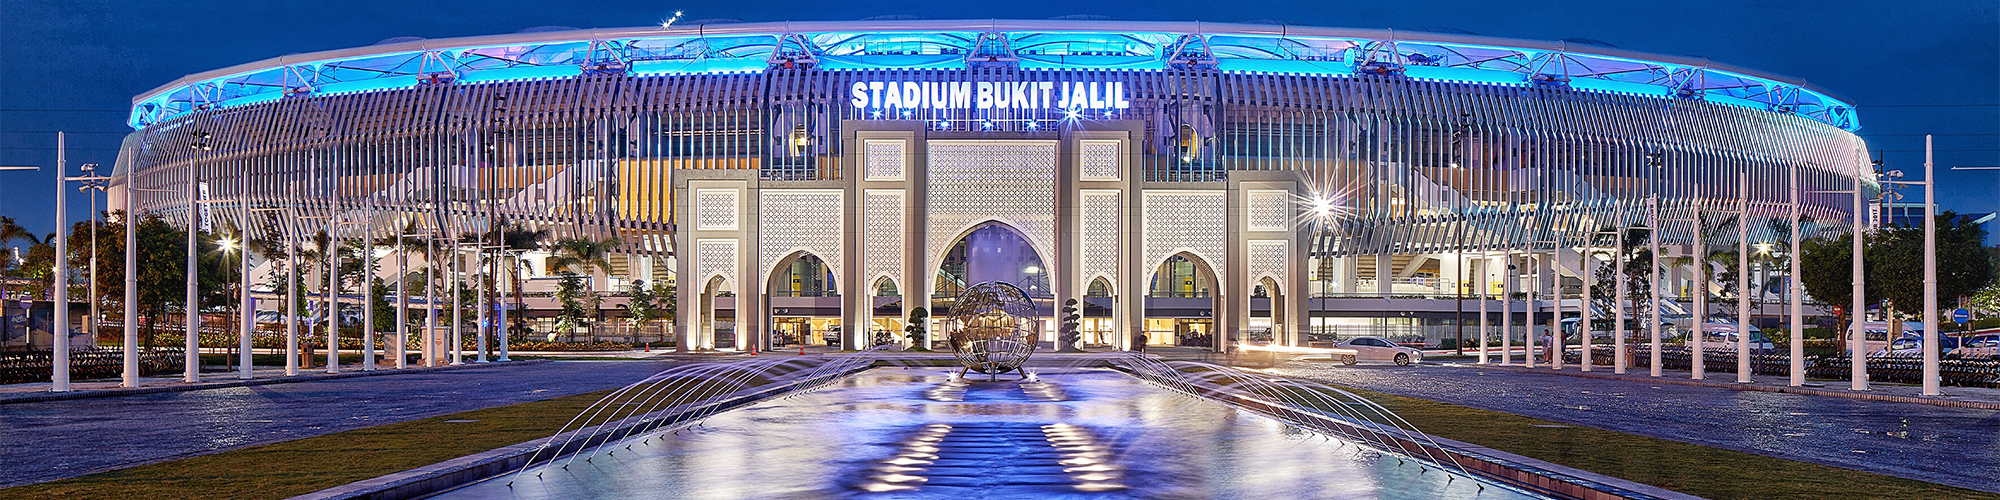 Bukit Jalil Stadium 1a